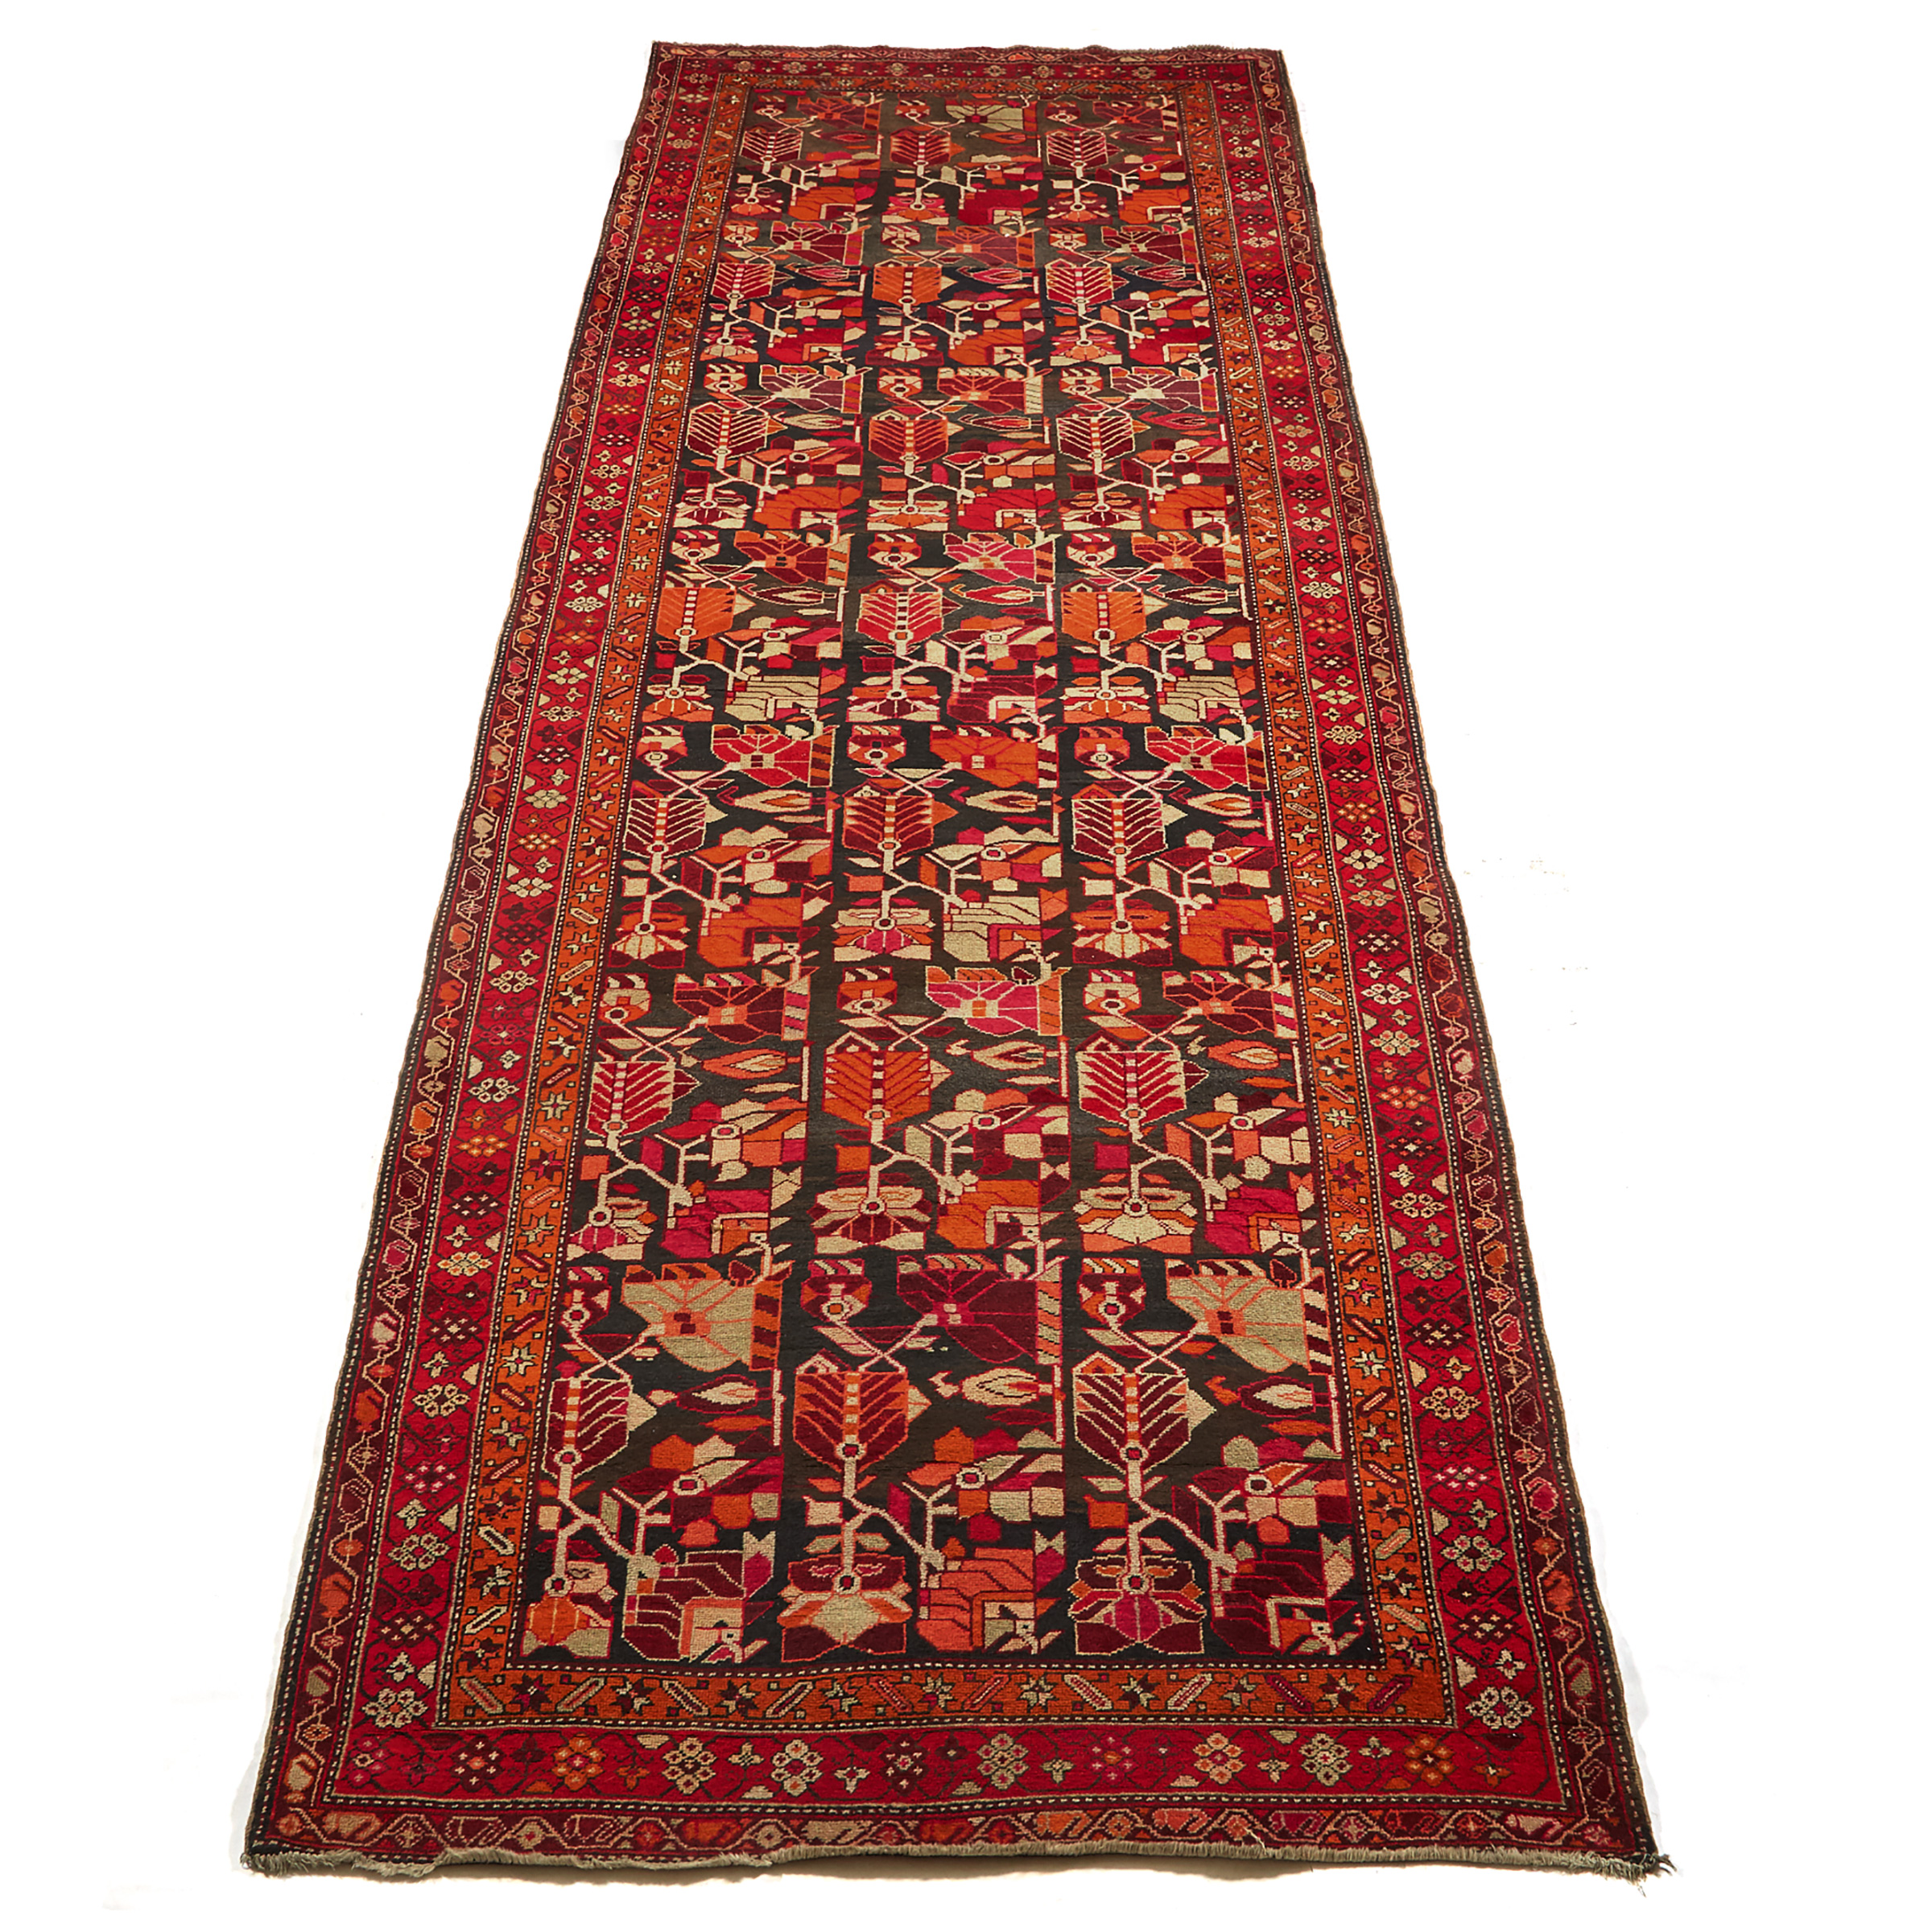 Northwest Persian Gallery Carpet, late 20th century